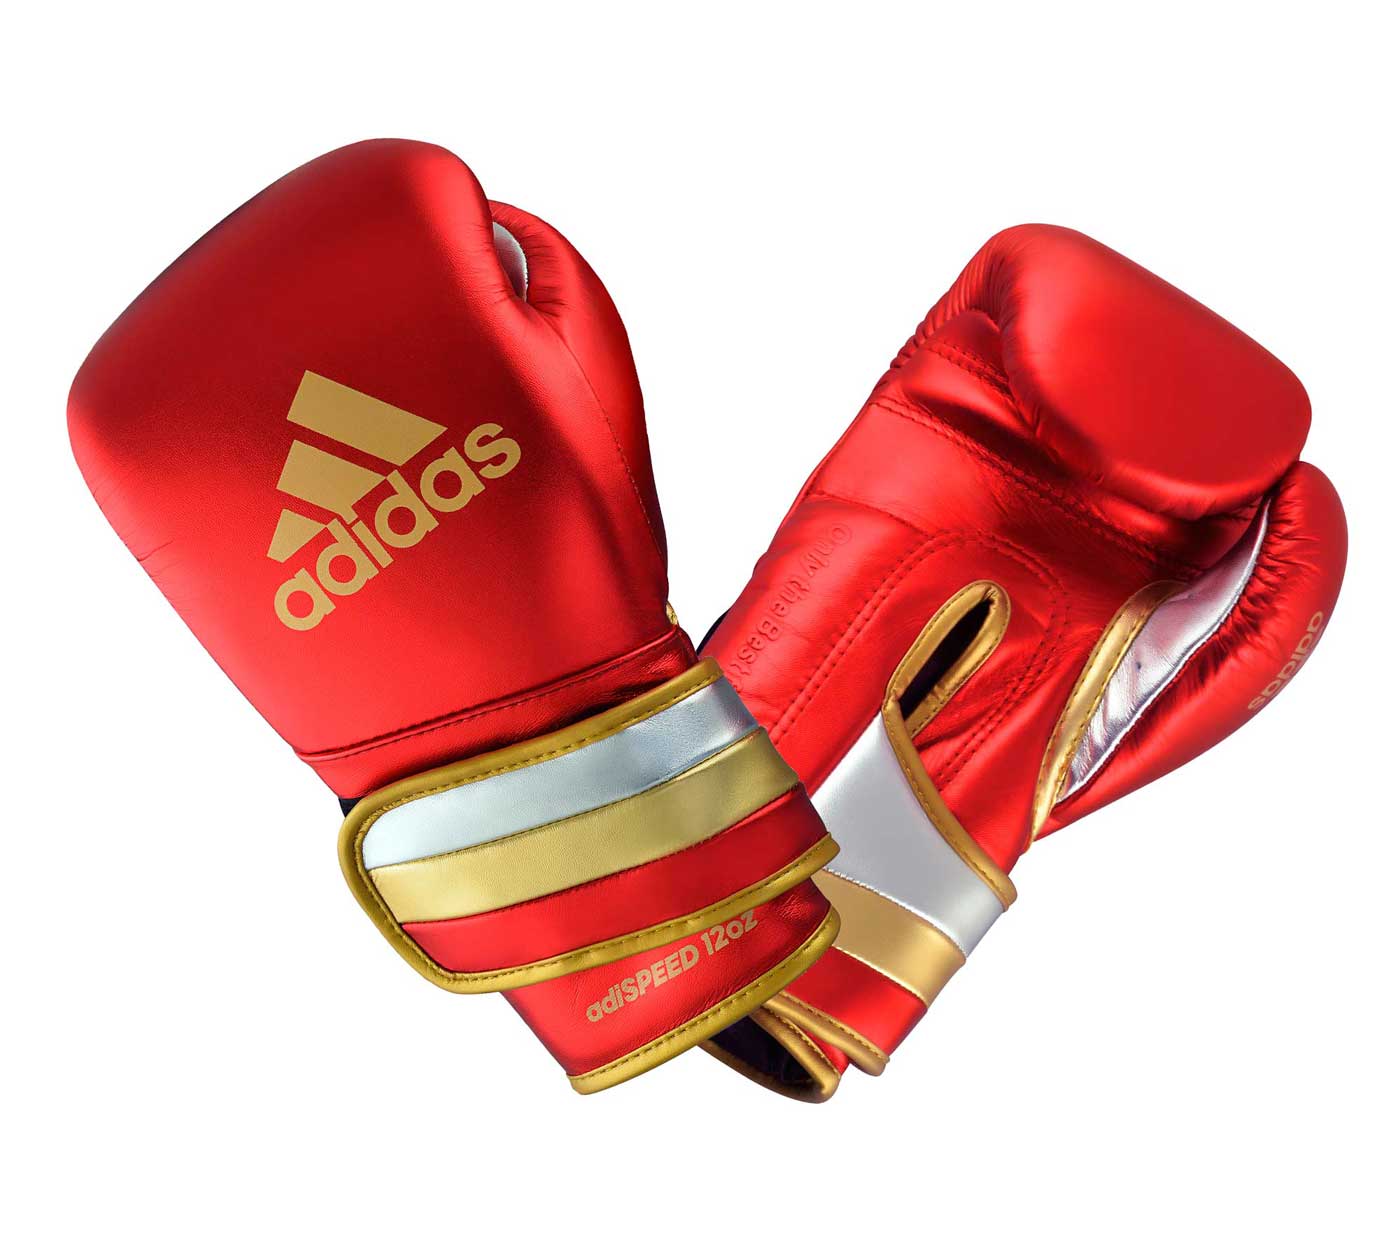 Перчатки боксерские adidas AdiSpeed Metallic красно-золото-серебристые 12 унц. артикул adiSBG501ProM